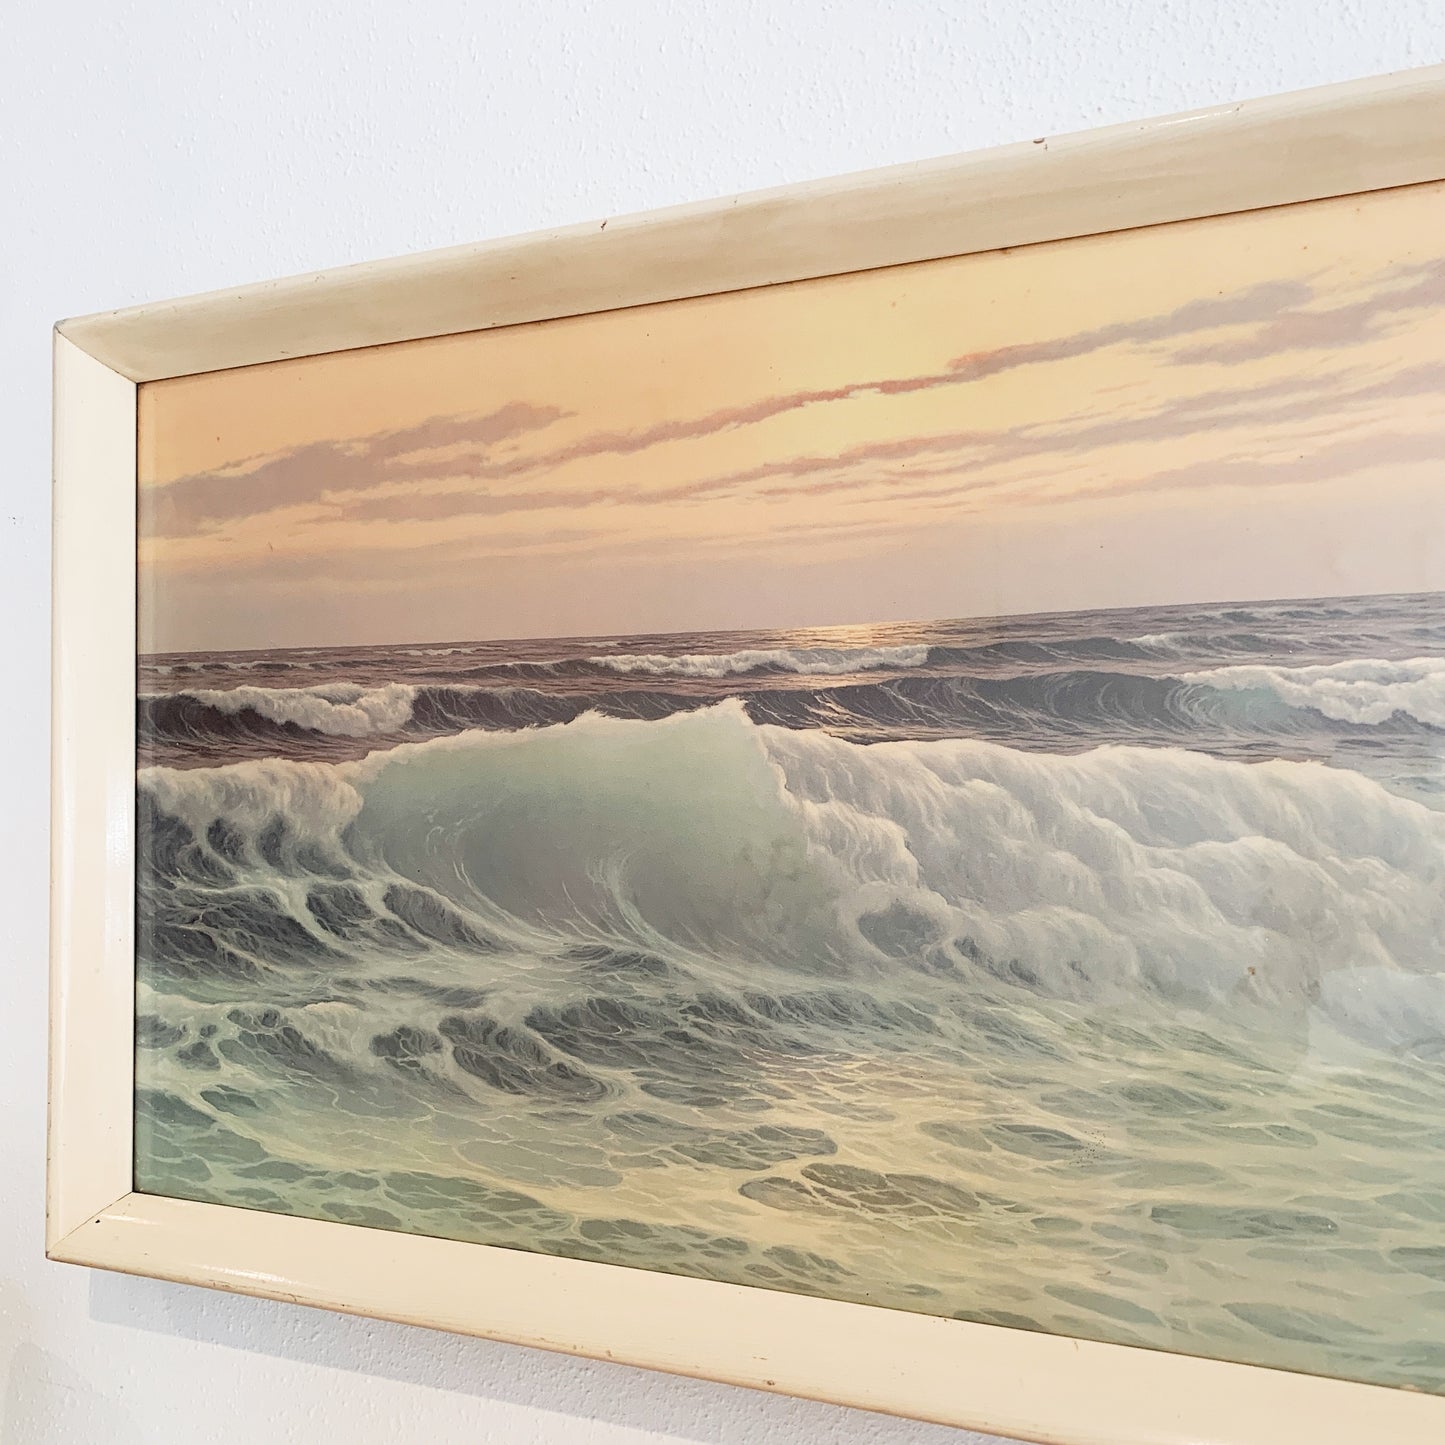 Vintage Edouard Mandon "Tumbling Waves" Print